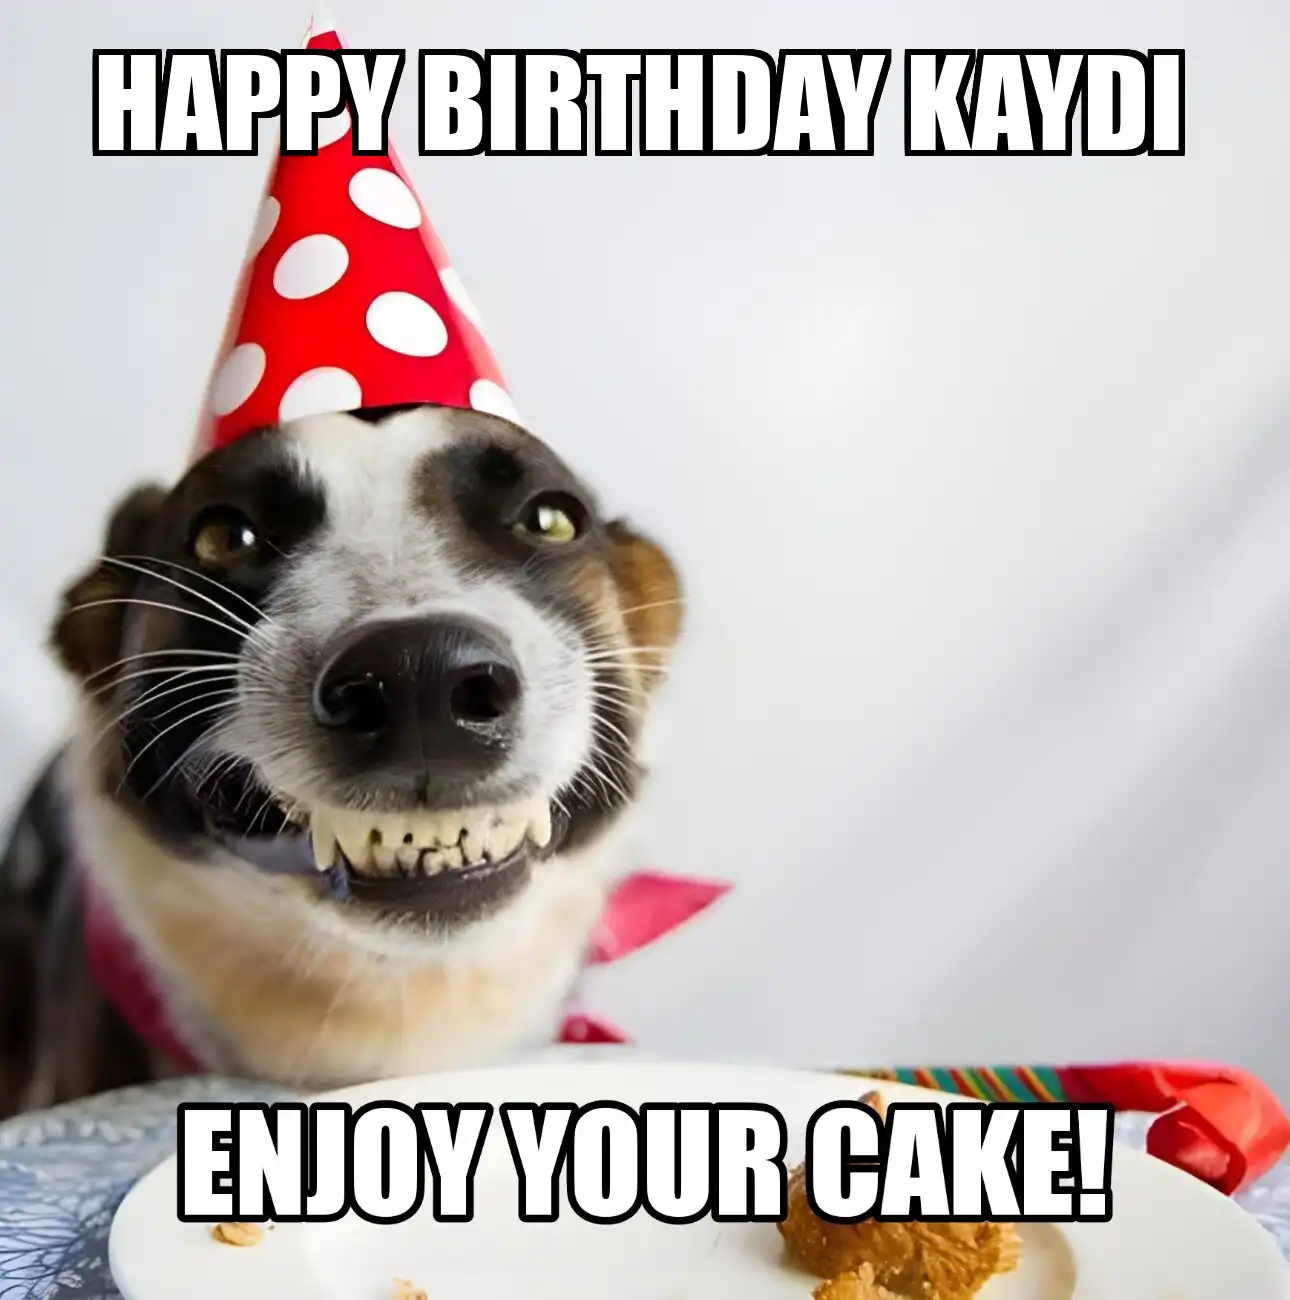 Happy Birthday Kaydi Enjoy Your Cake Dog Meme